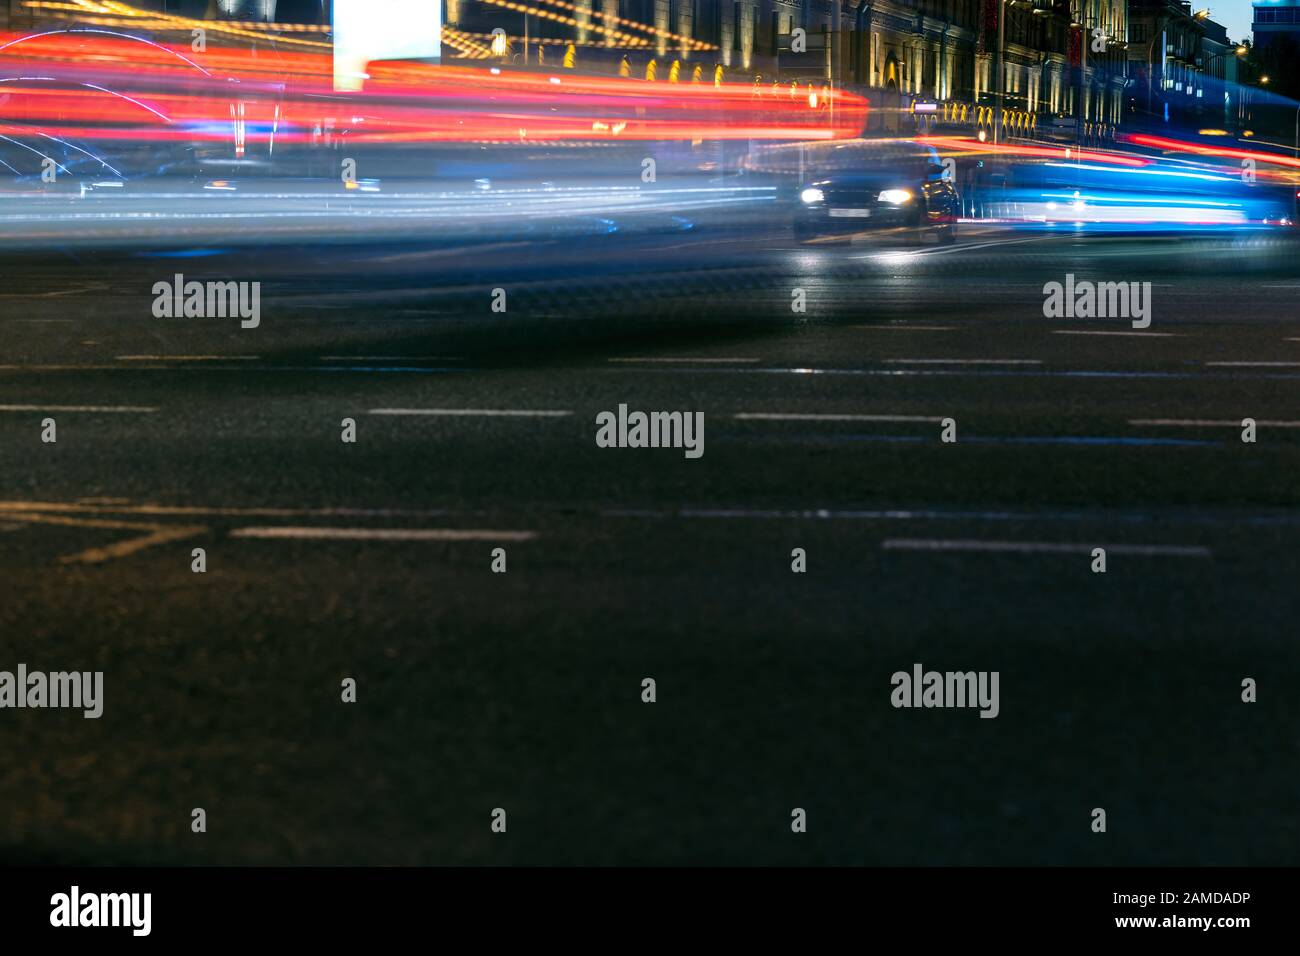 blurred traffic lights at night, long exposure image Stock Photo